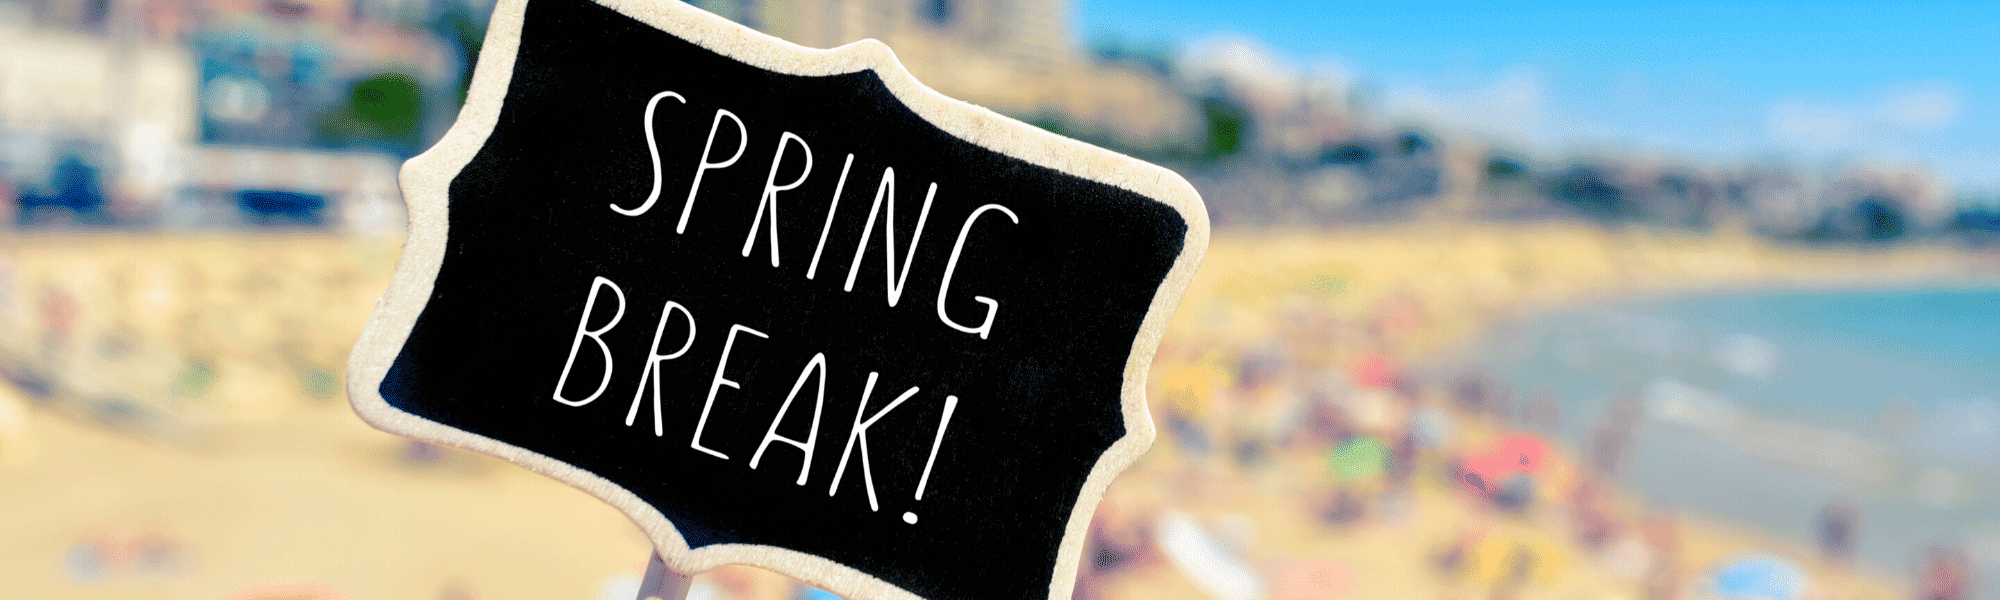 image of spring break header